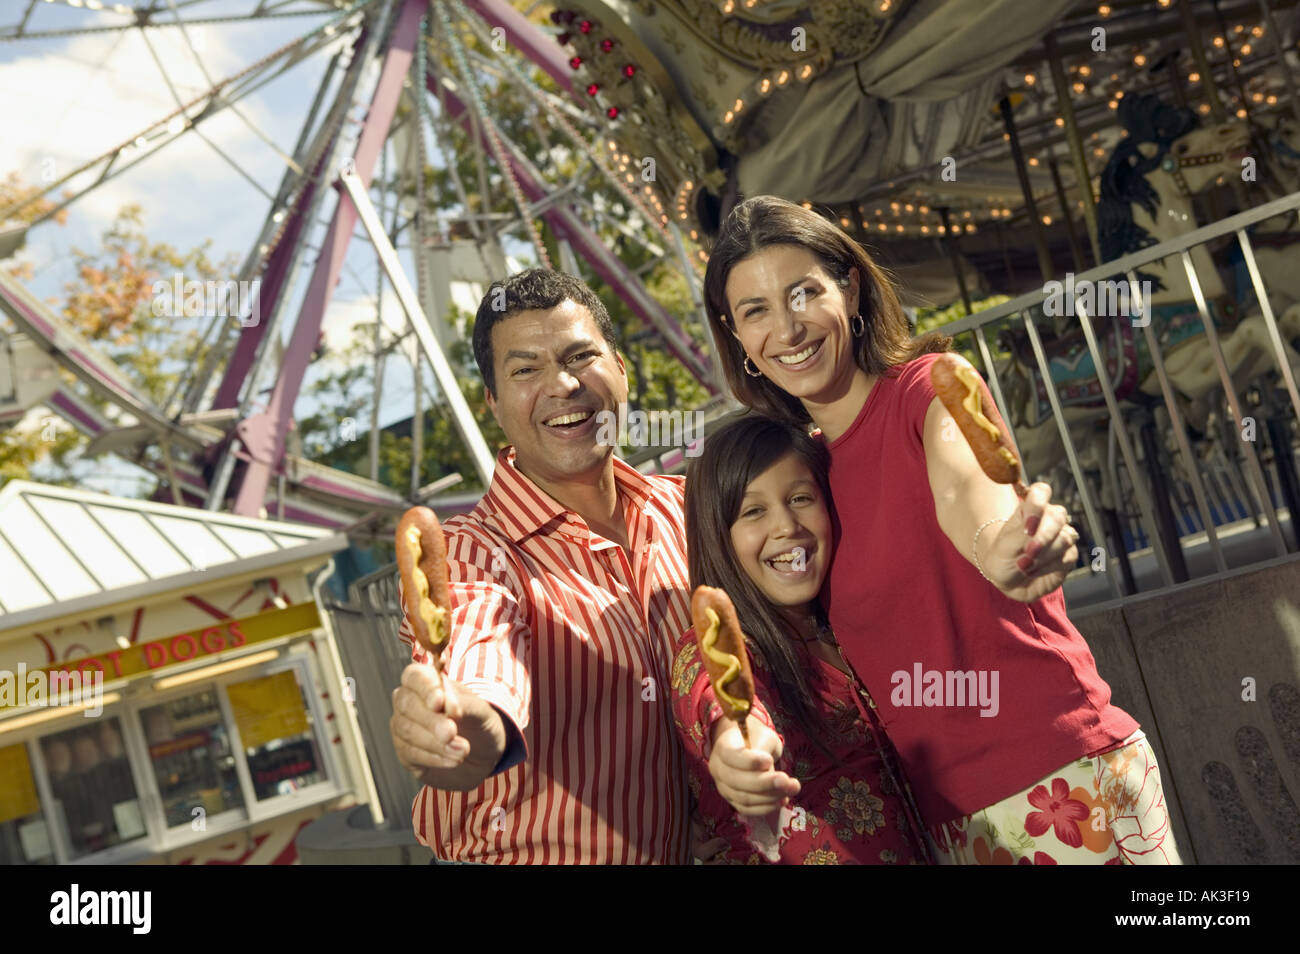 Parents and daughter eating at an amusement park Stock Photo